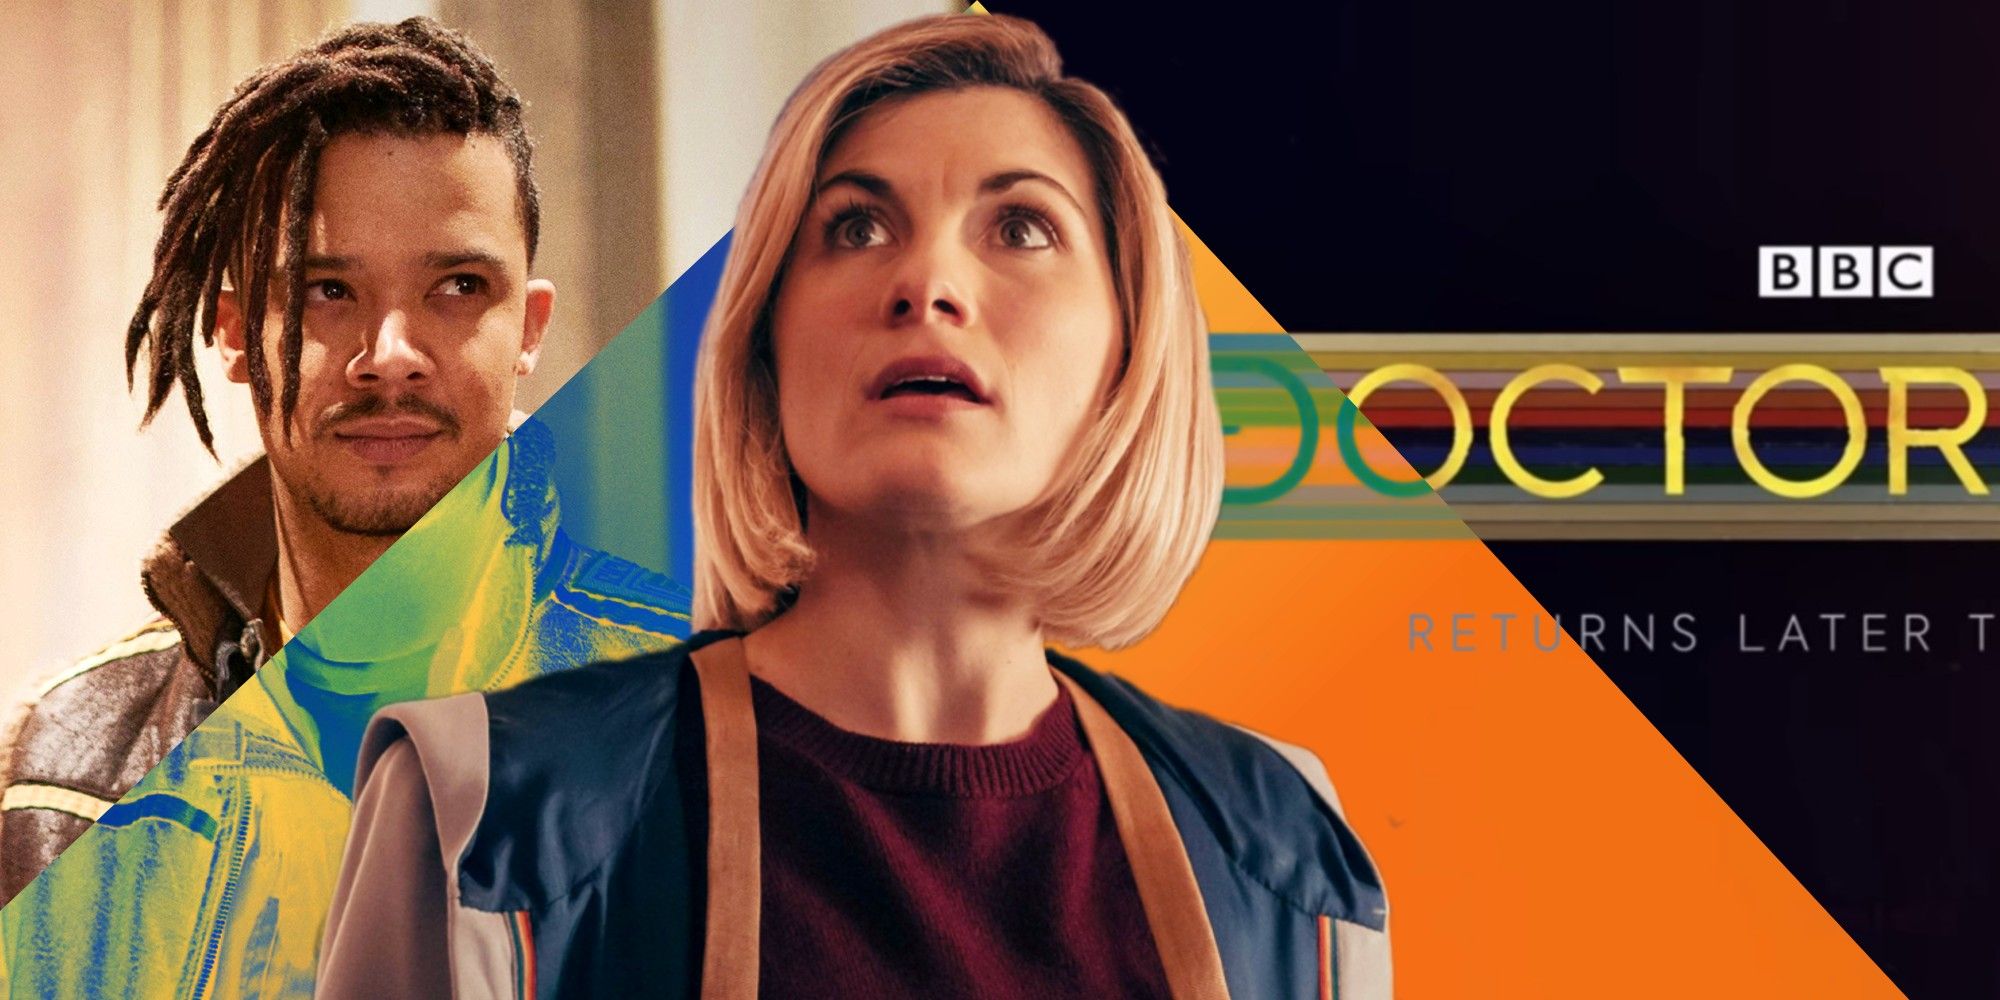 doctor who season 13 sdcc 2021 panel reveals